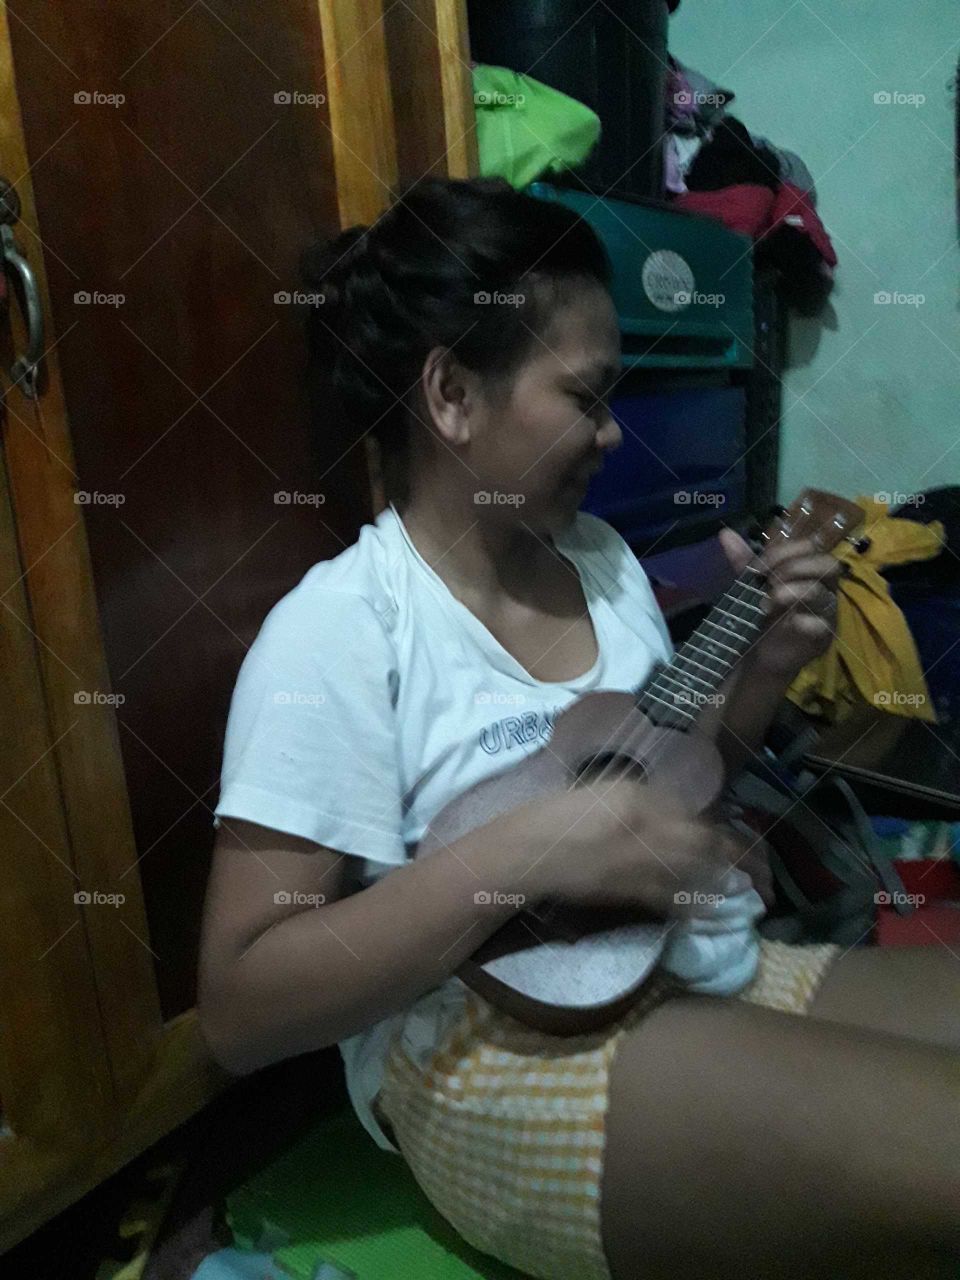 My ukulele and my practice moment!